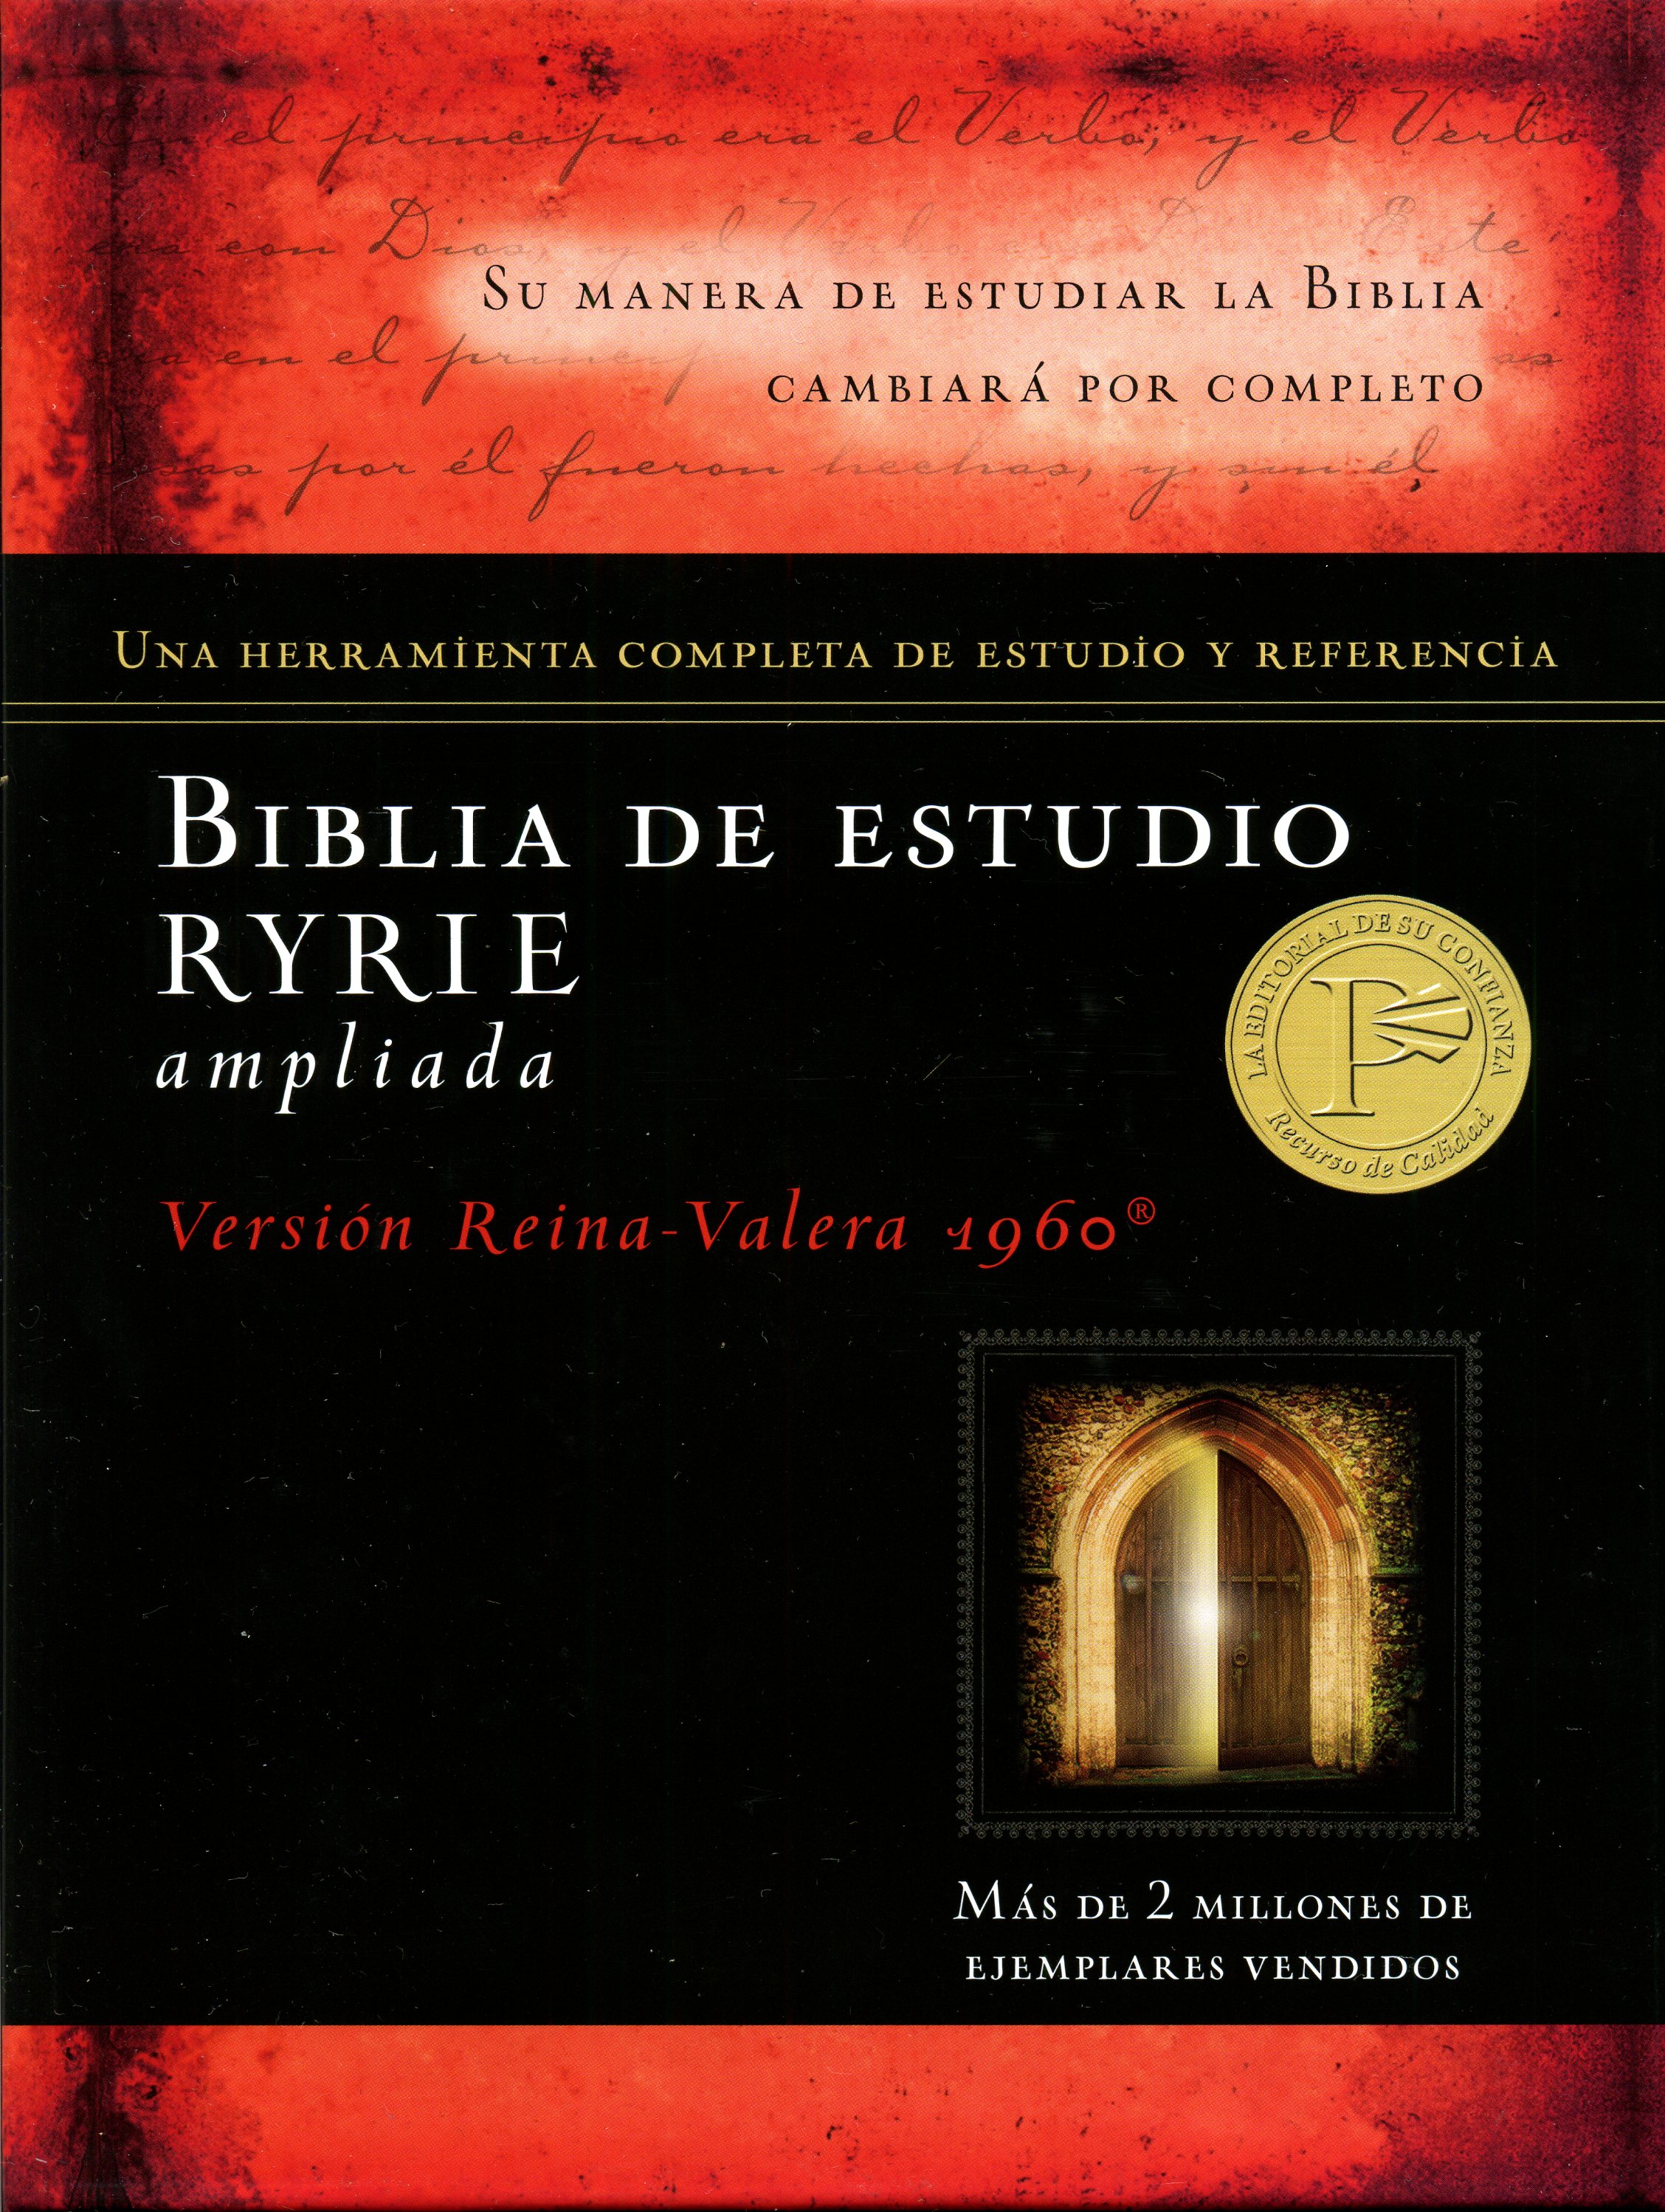 Biblia de Estudio Ryrie Ampliada RVR60